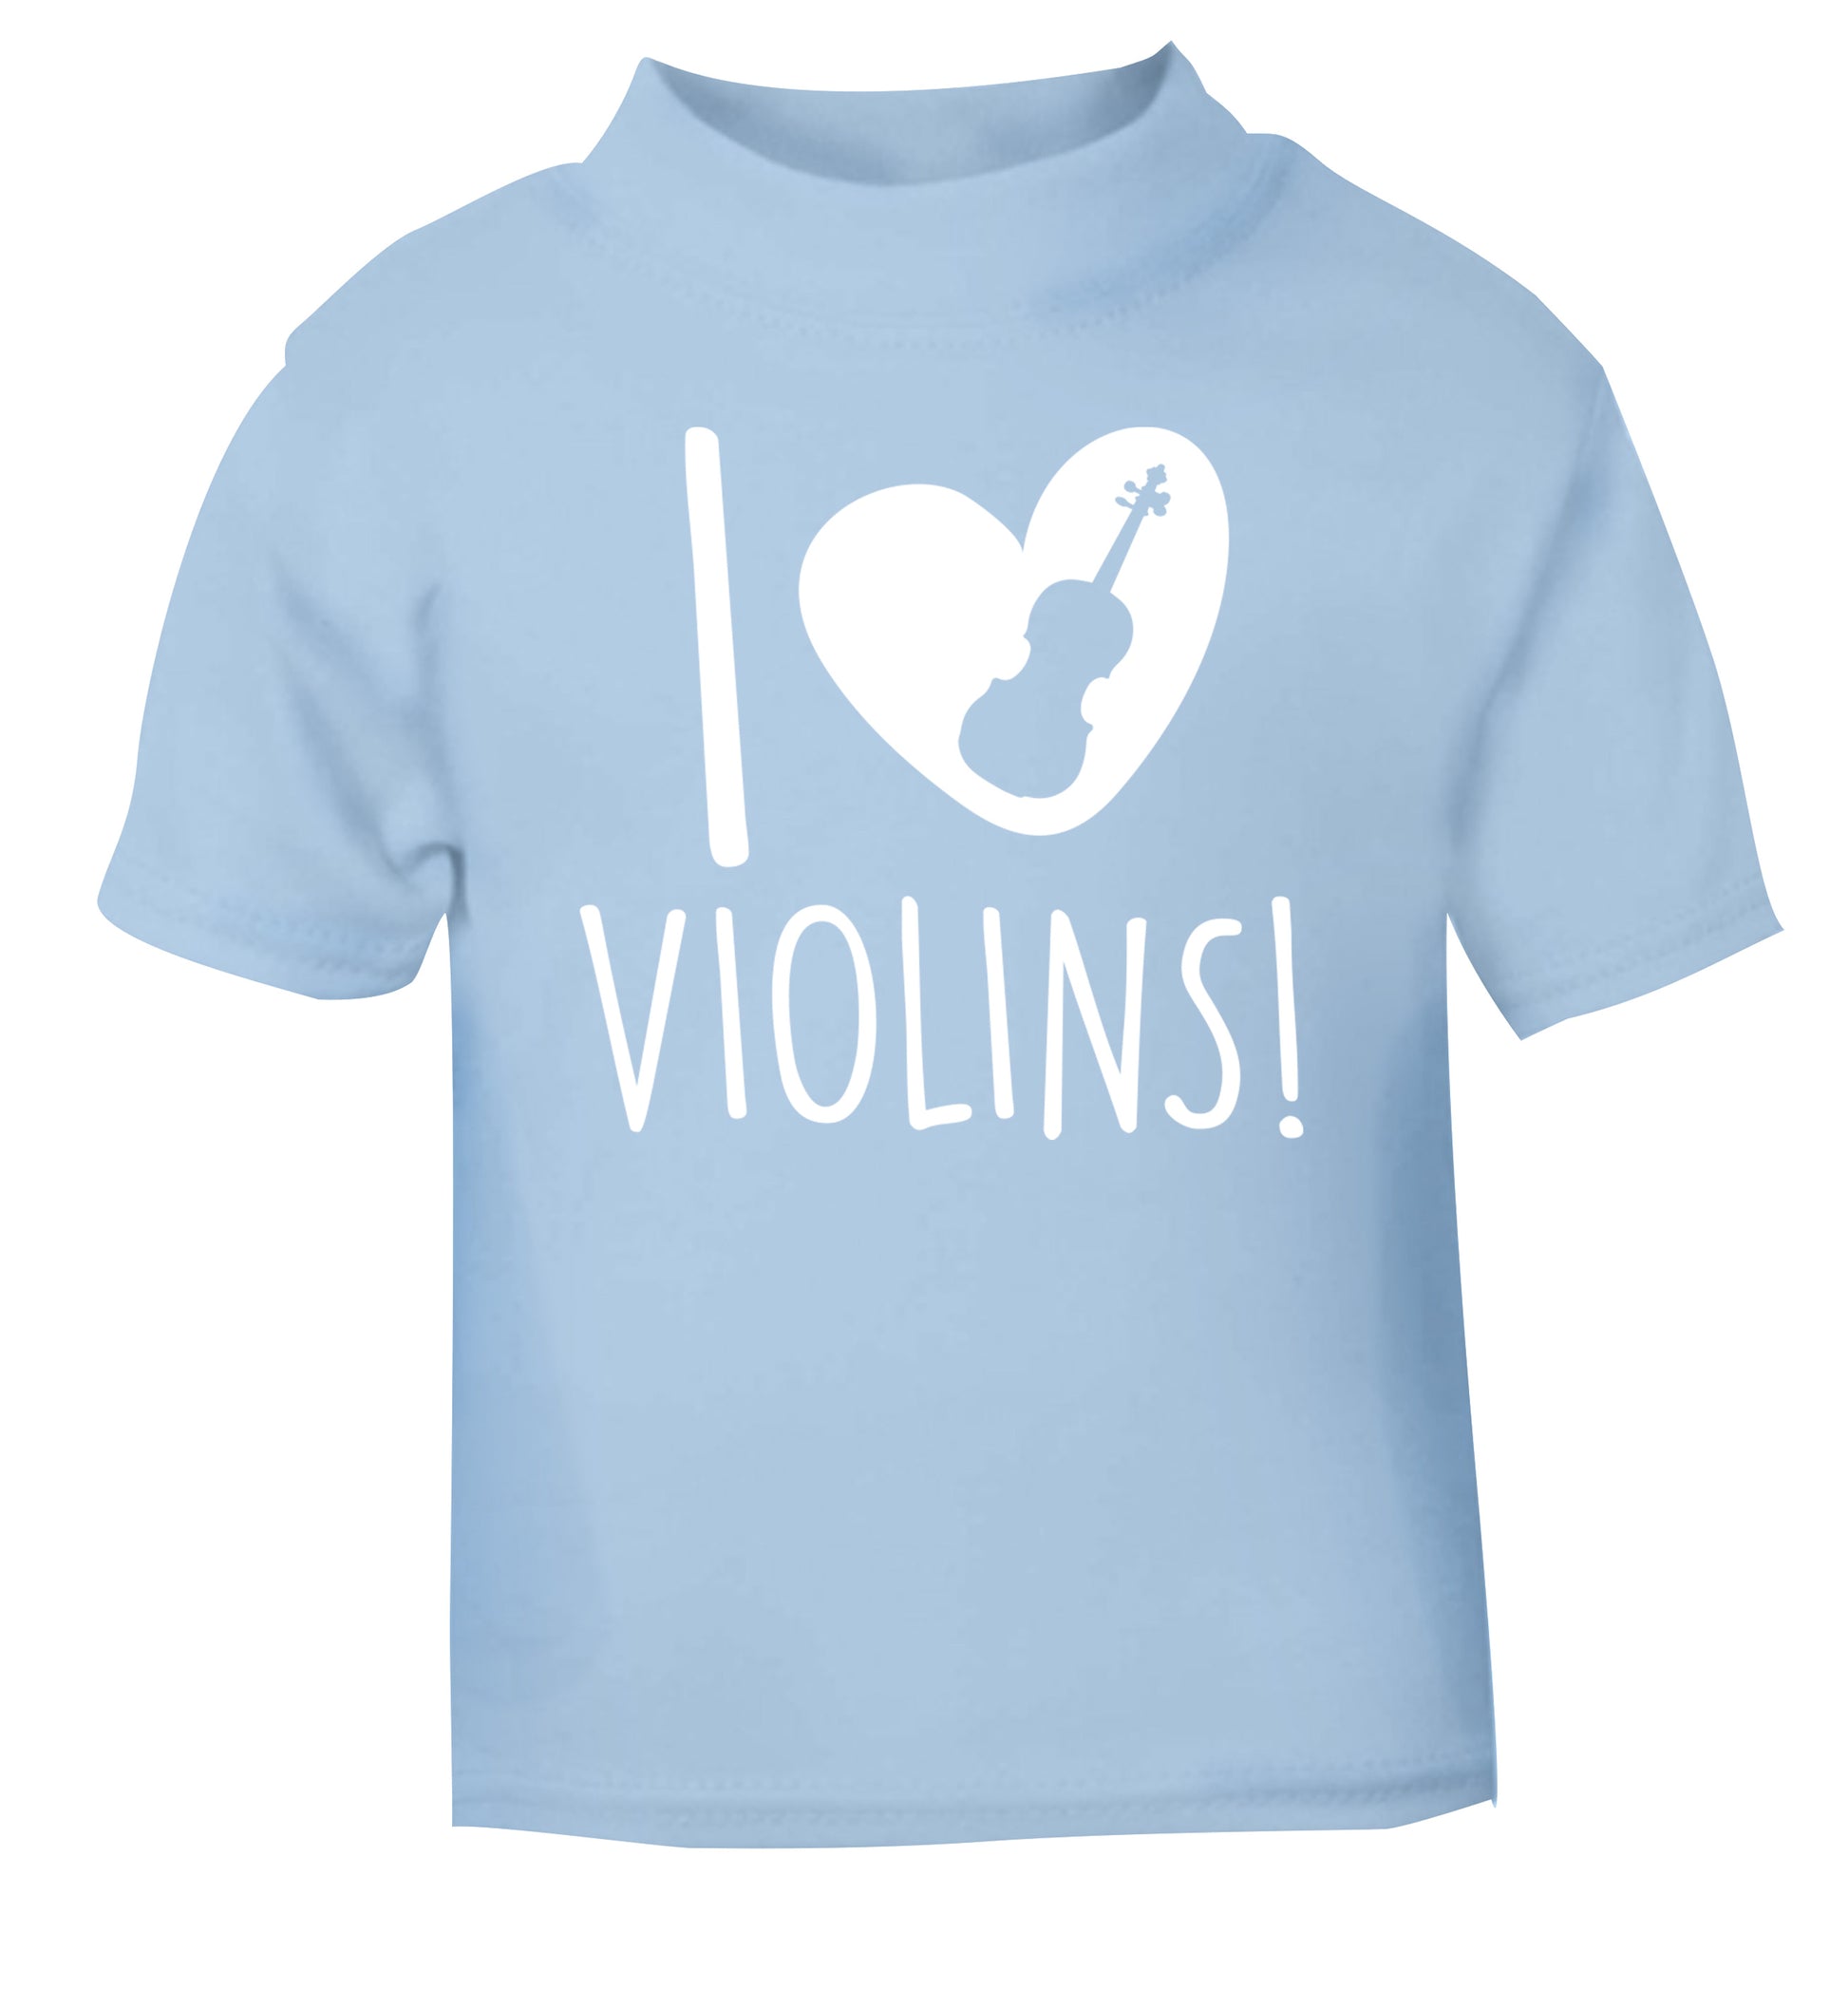 I Love Violins light blue Baby Toddler Tshirt 2 Years